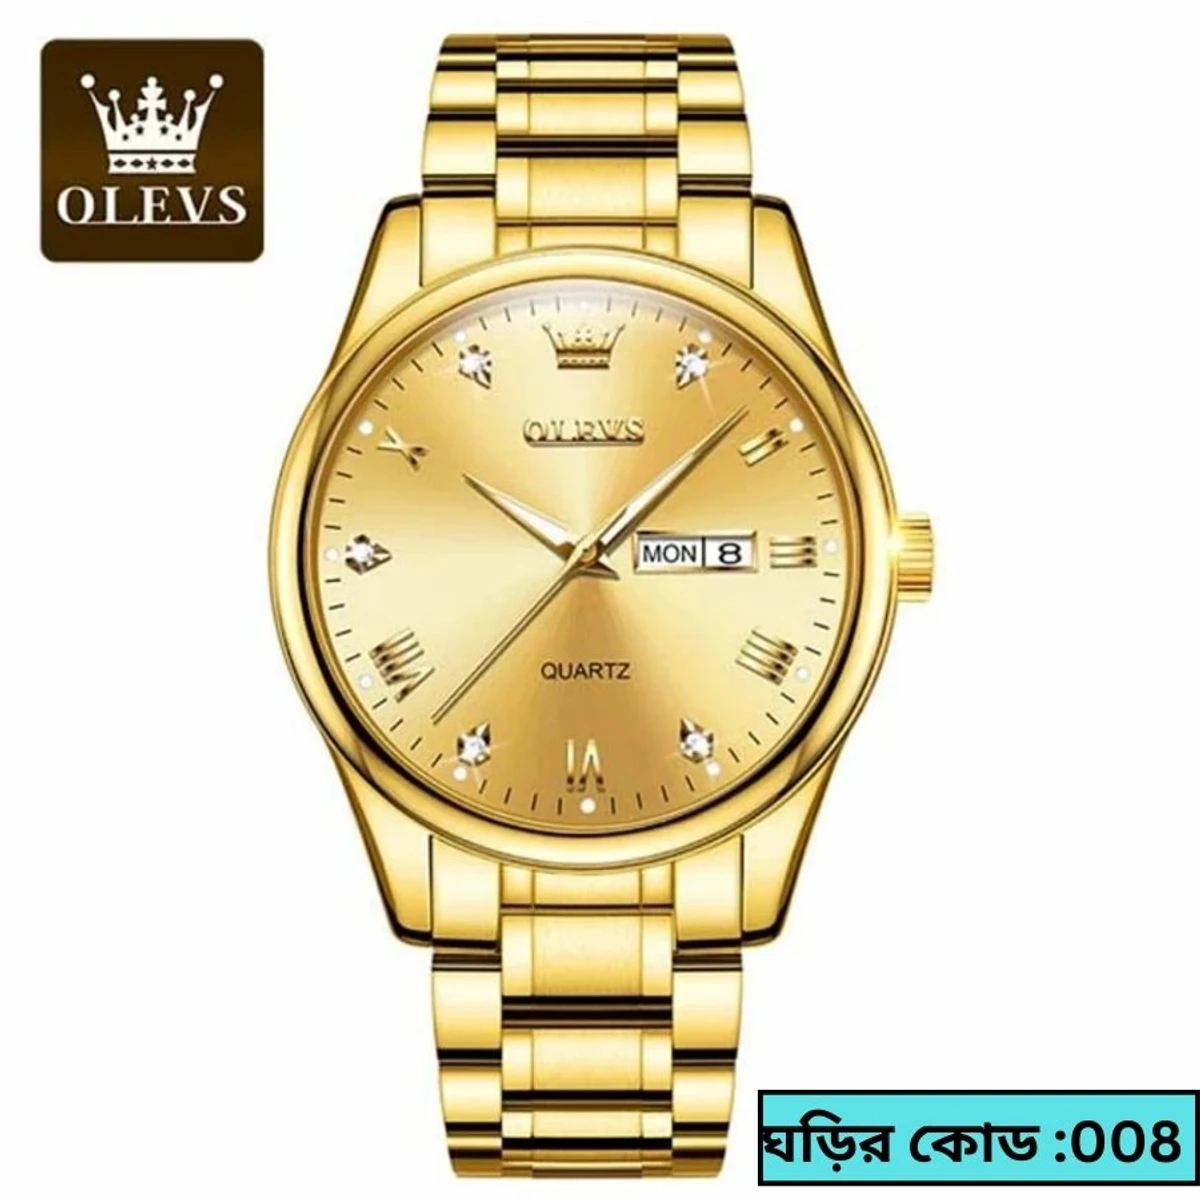 Top Brand OLEVS 5563 MODEL FULL GOLDEN  COLOURWATCH FOR MAN